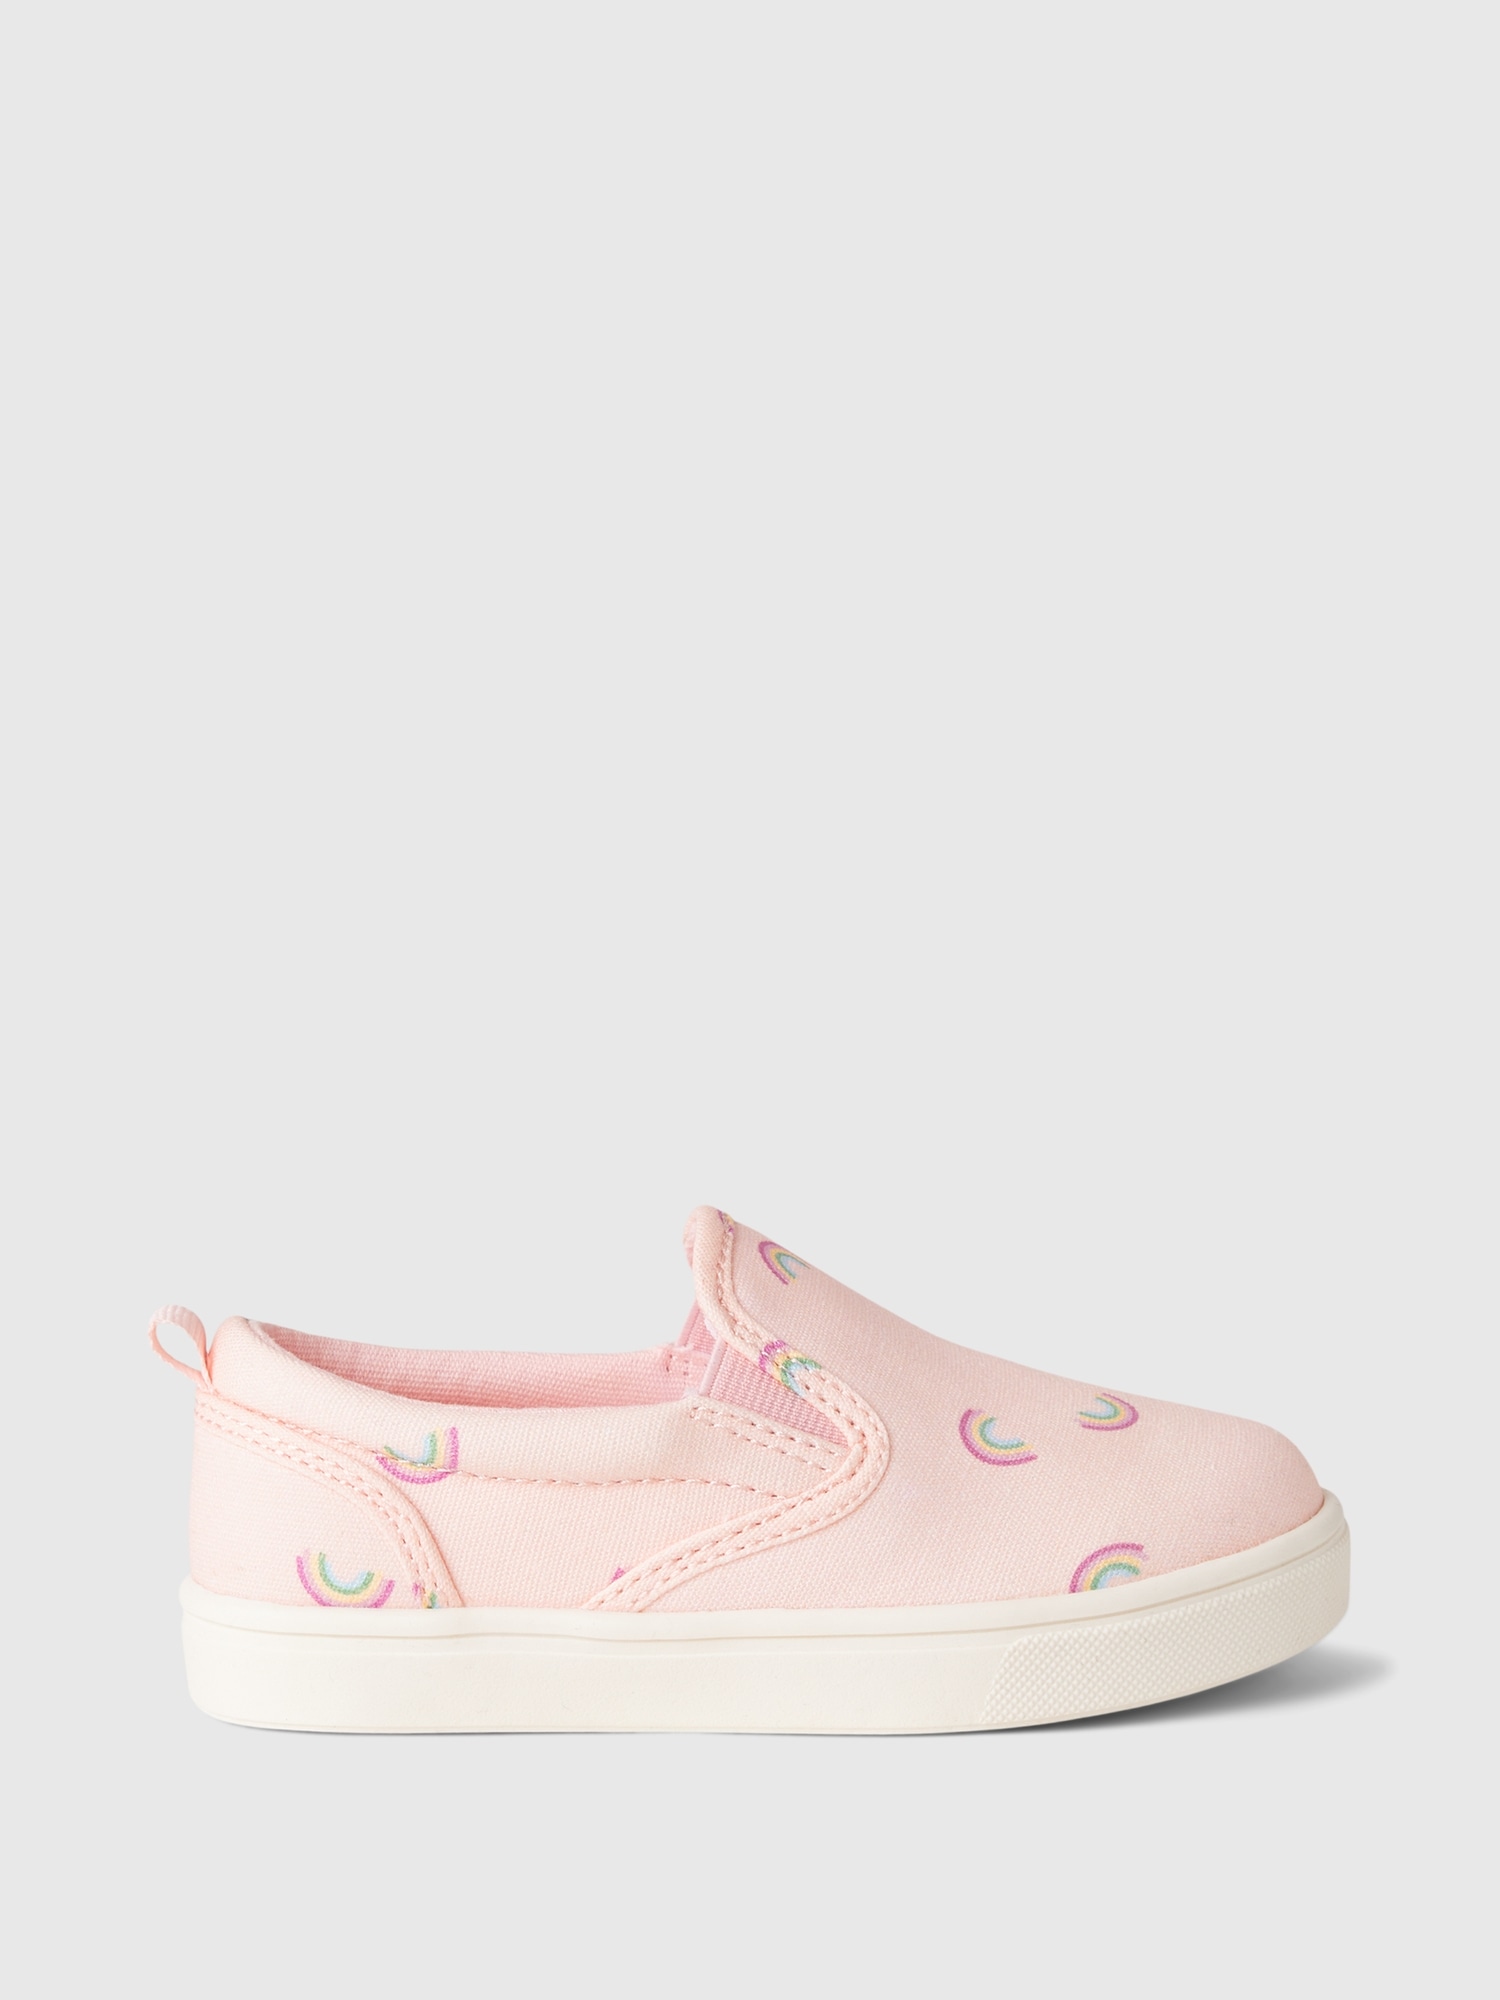 Toddler Rainbow Slip-On Sneakers